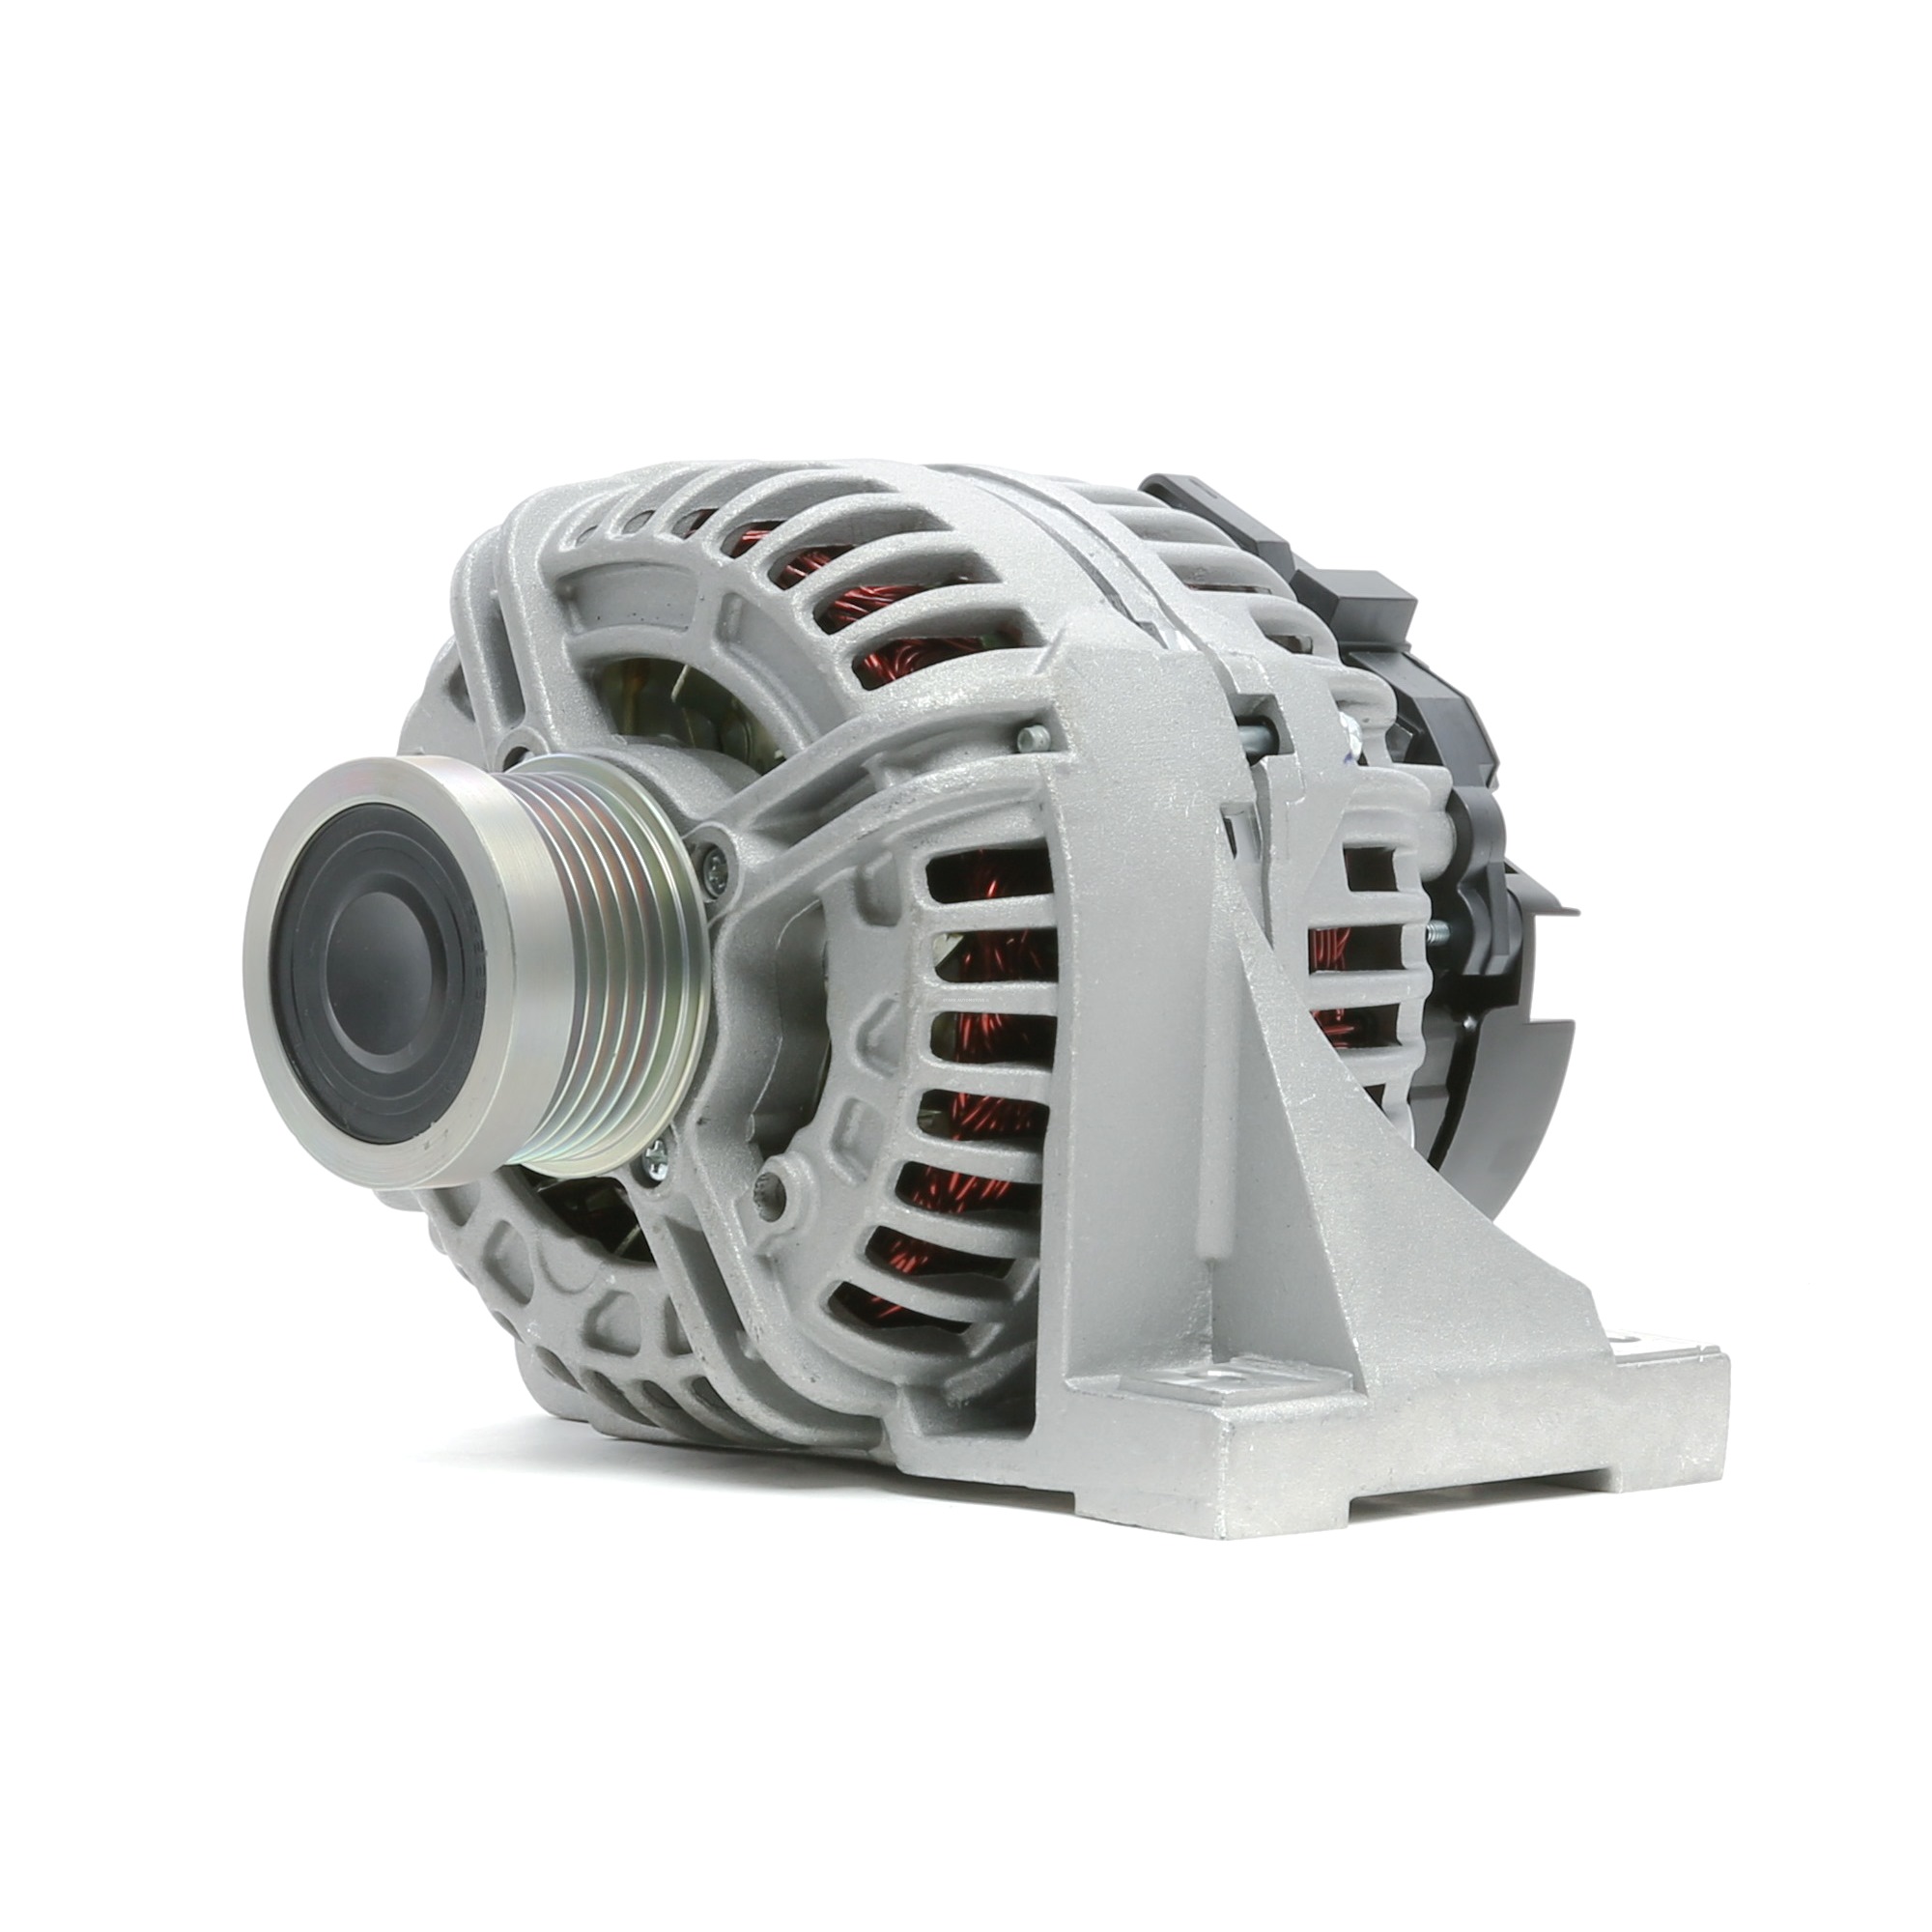 STARK SKGN-0320017 Alternator 14V, 140A, B+ (M8), LIN Plug 195, Plug710, excl. vacuum pump, Ø 56 mm, with integrated regulator